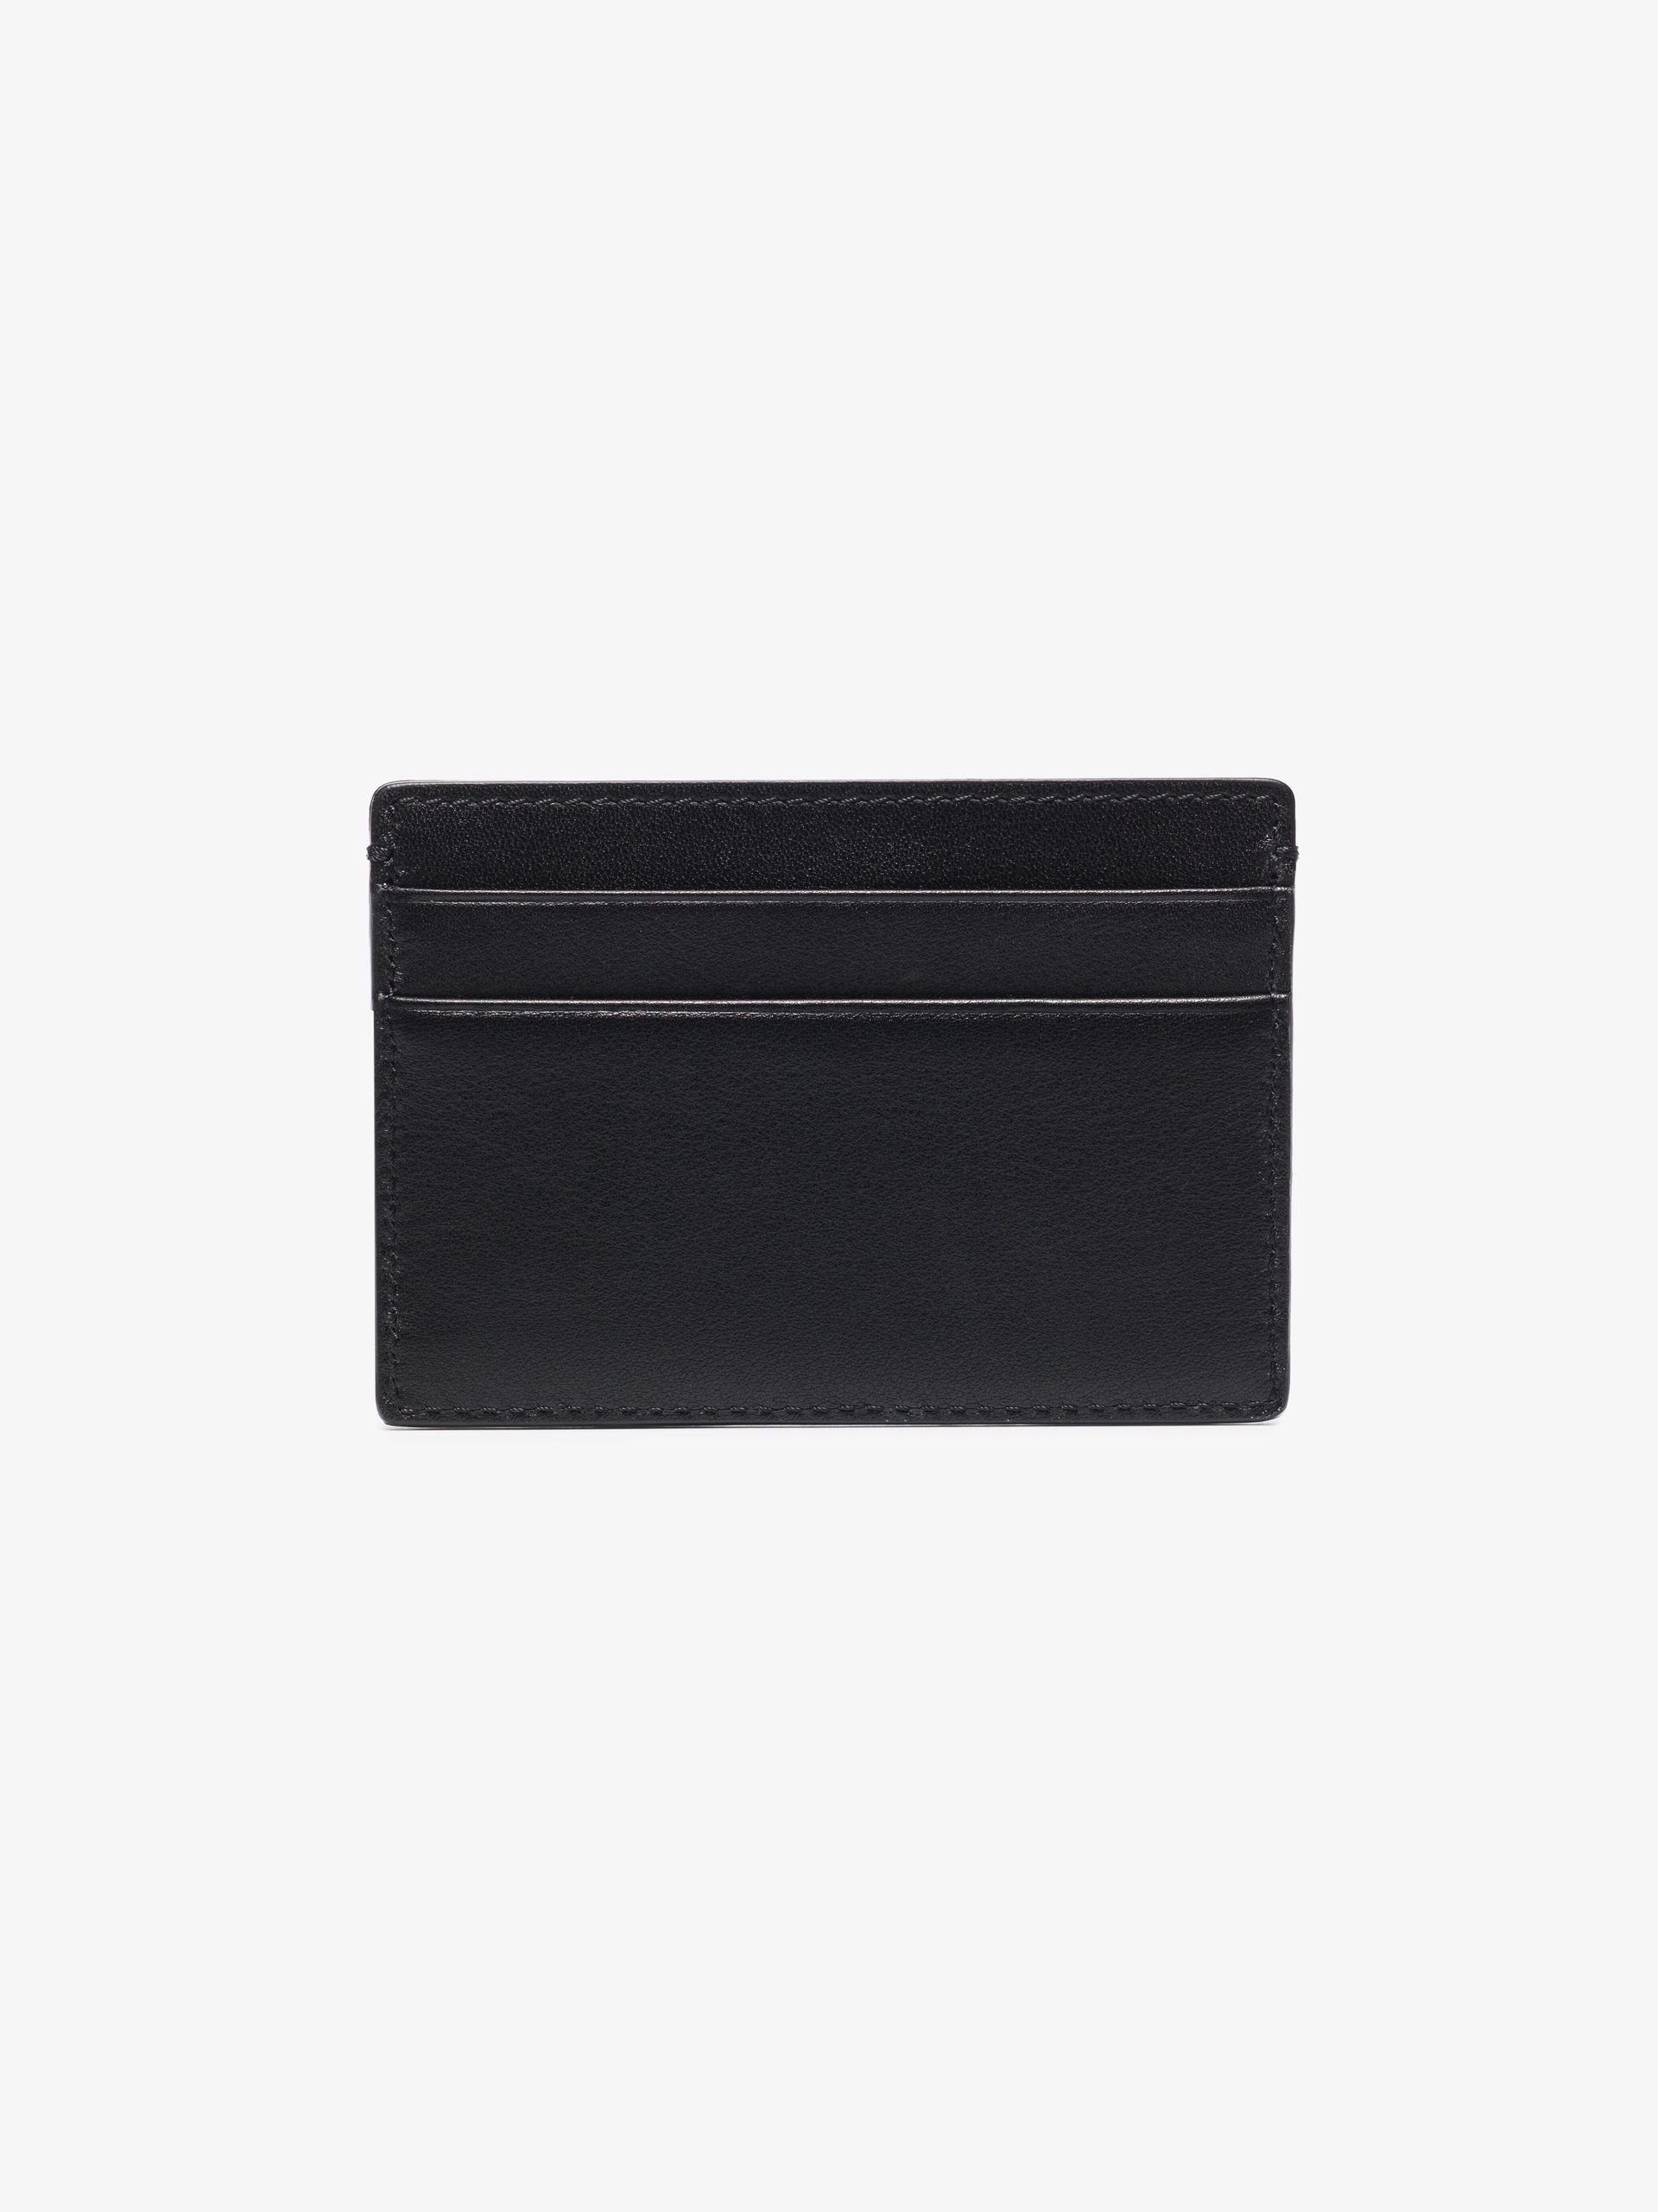 Black La Medusa leather card holder - 2